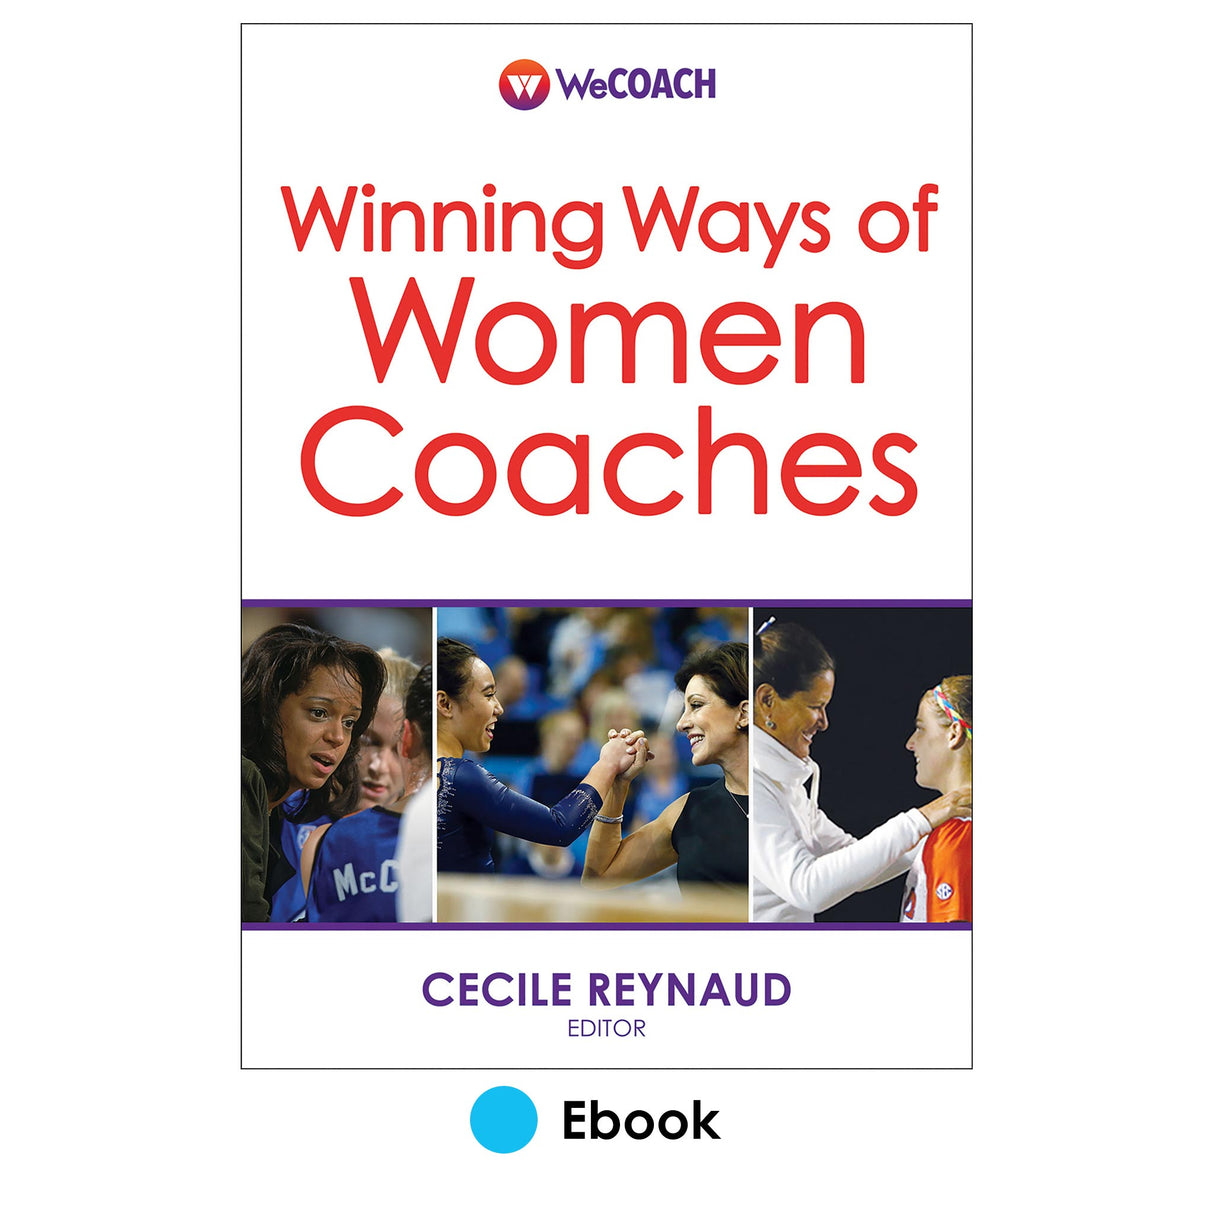 Winning Ways of Women Coaches epub